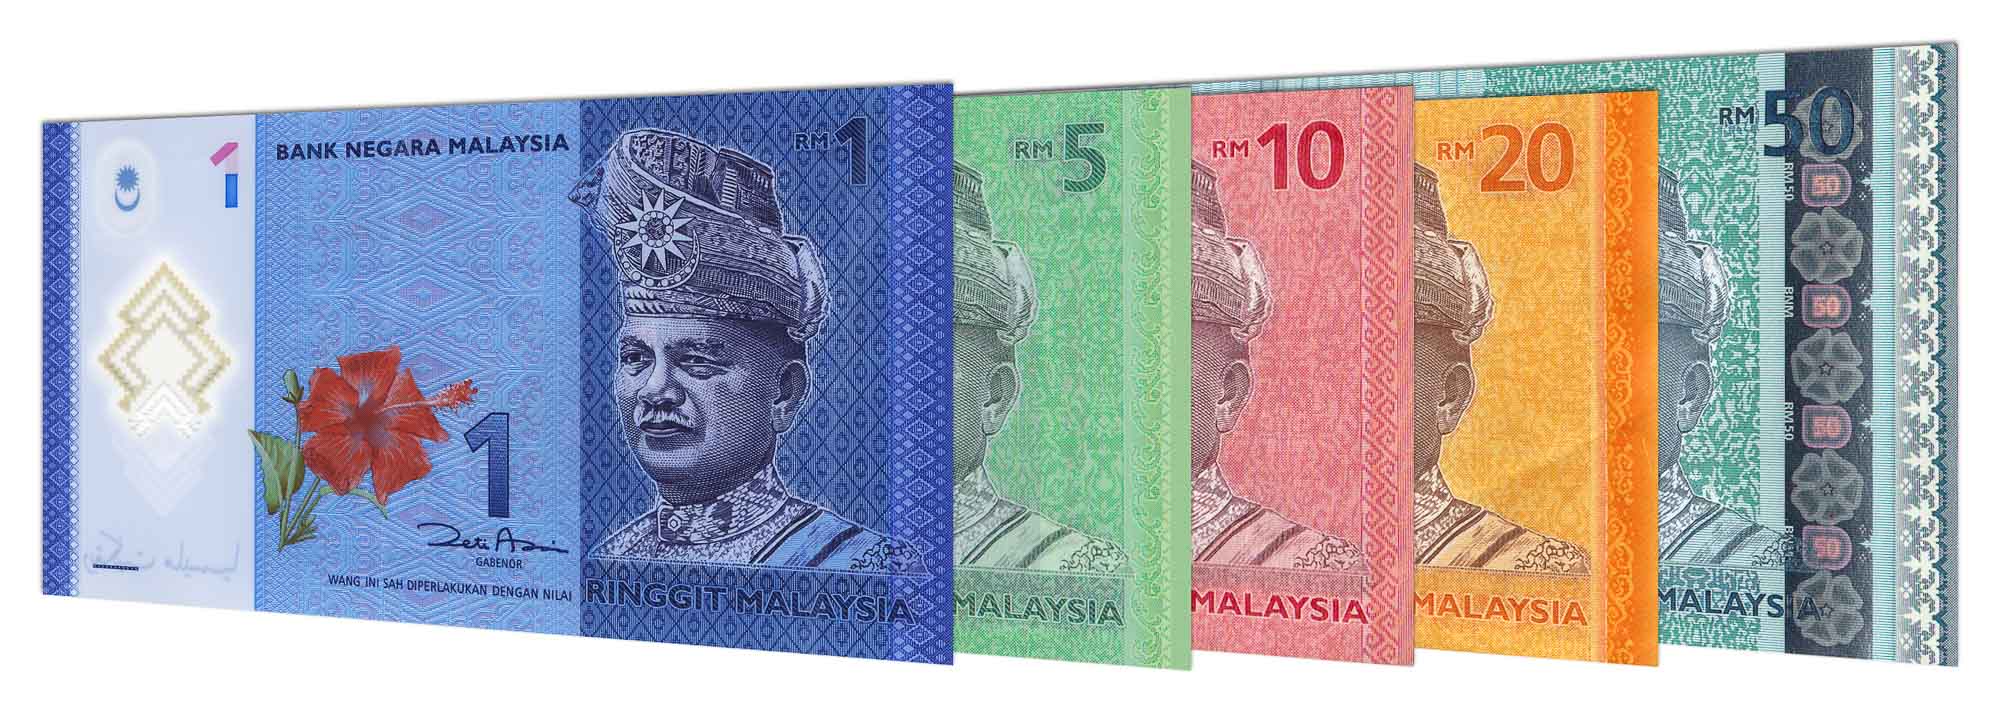 Malaysian ringgit in pakistani rupees